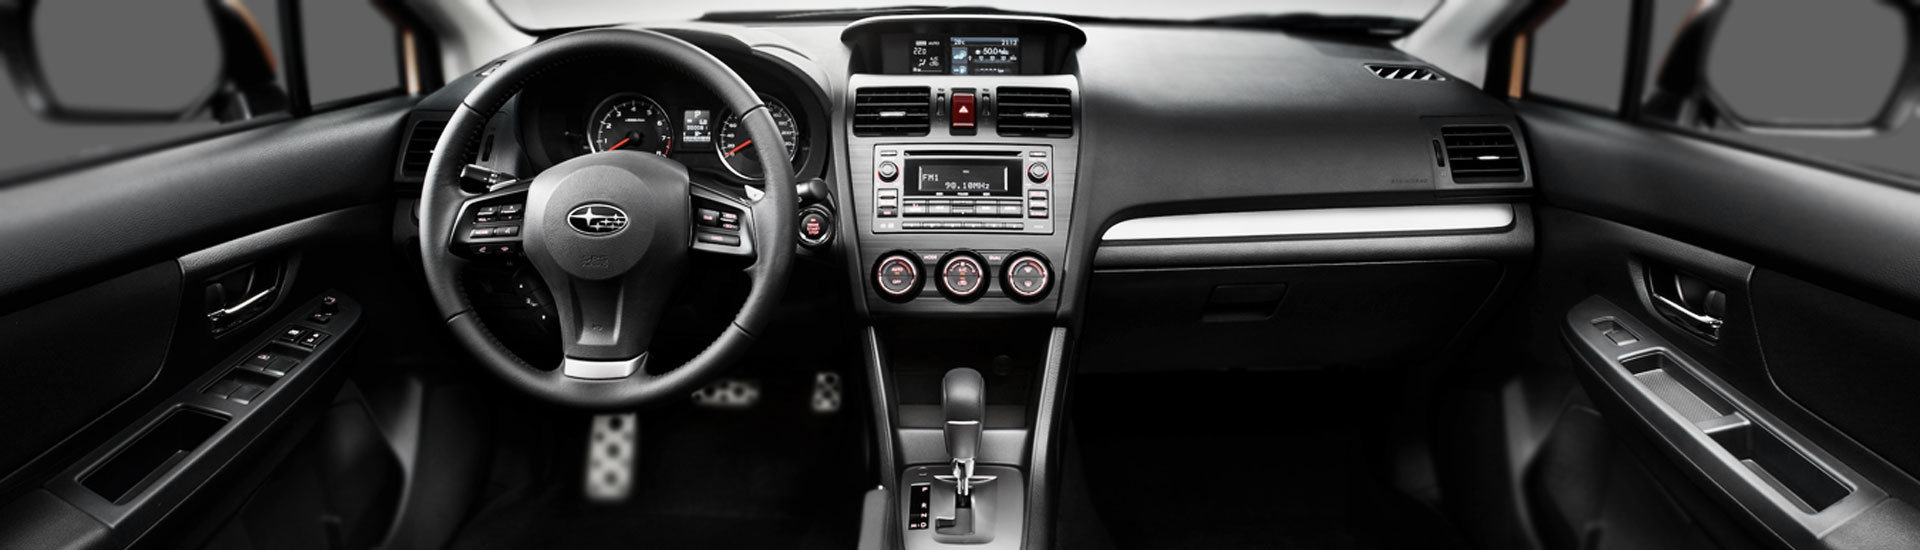 2012 Subaru Impreza Custom Dash Kits